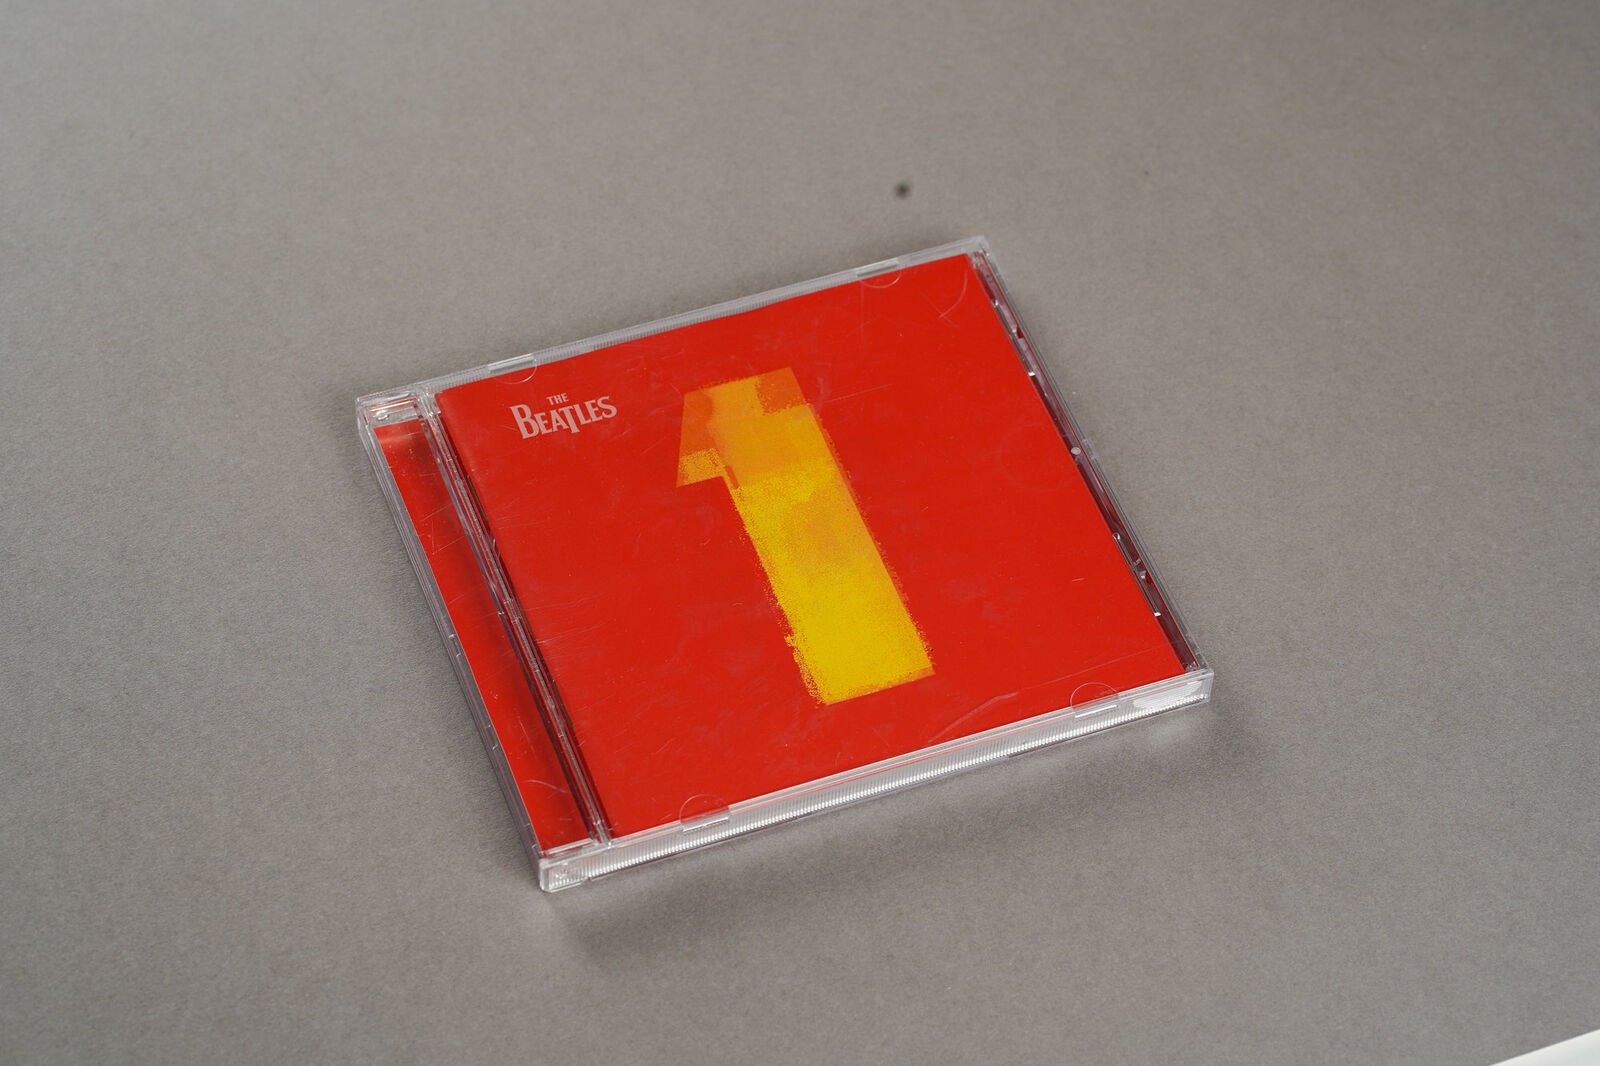 The Beatles - 1 - 2000 Original CD Compact Disc Album